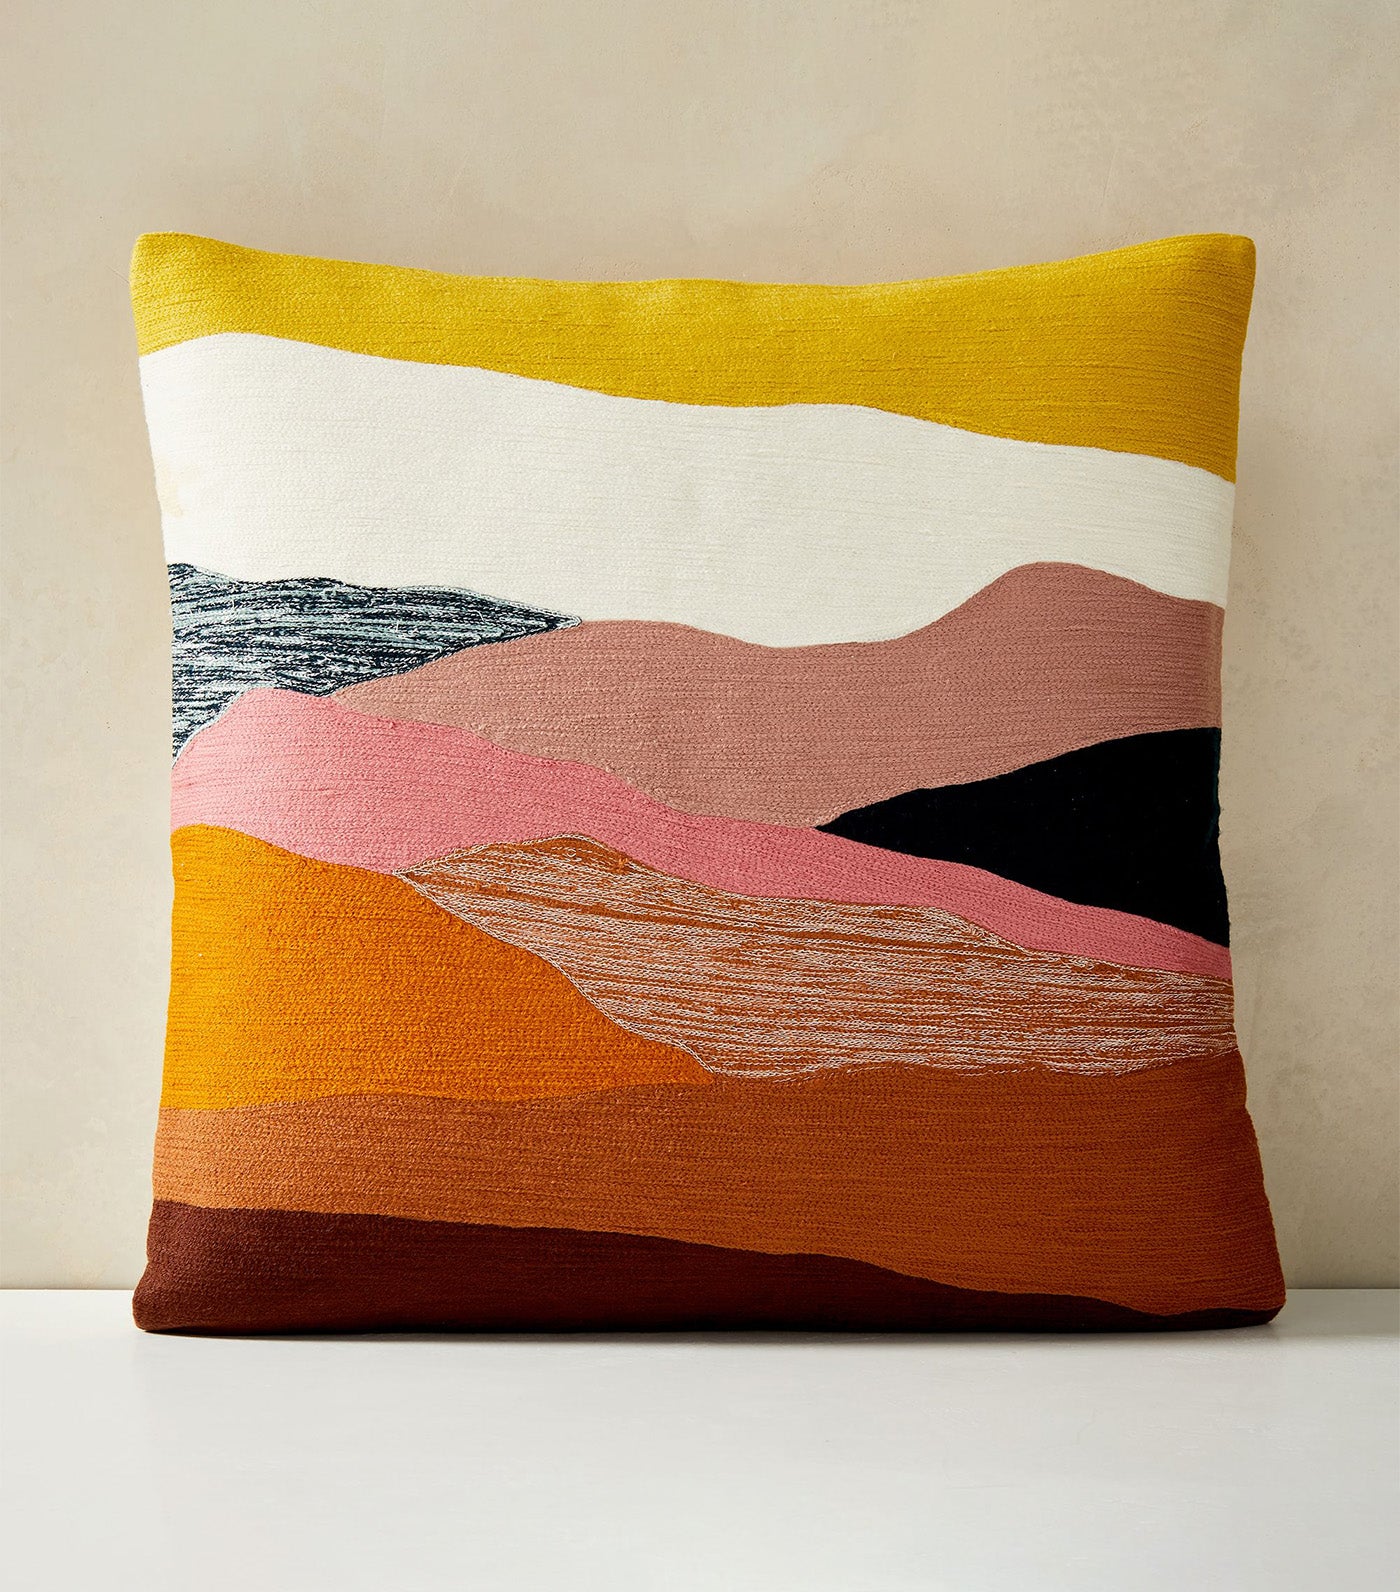  west elm Crewel Landscape Pillow Cover - Desert Sunset